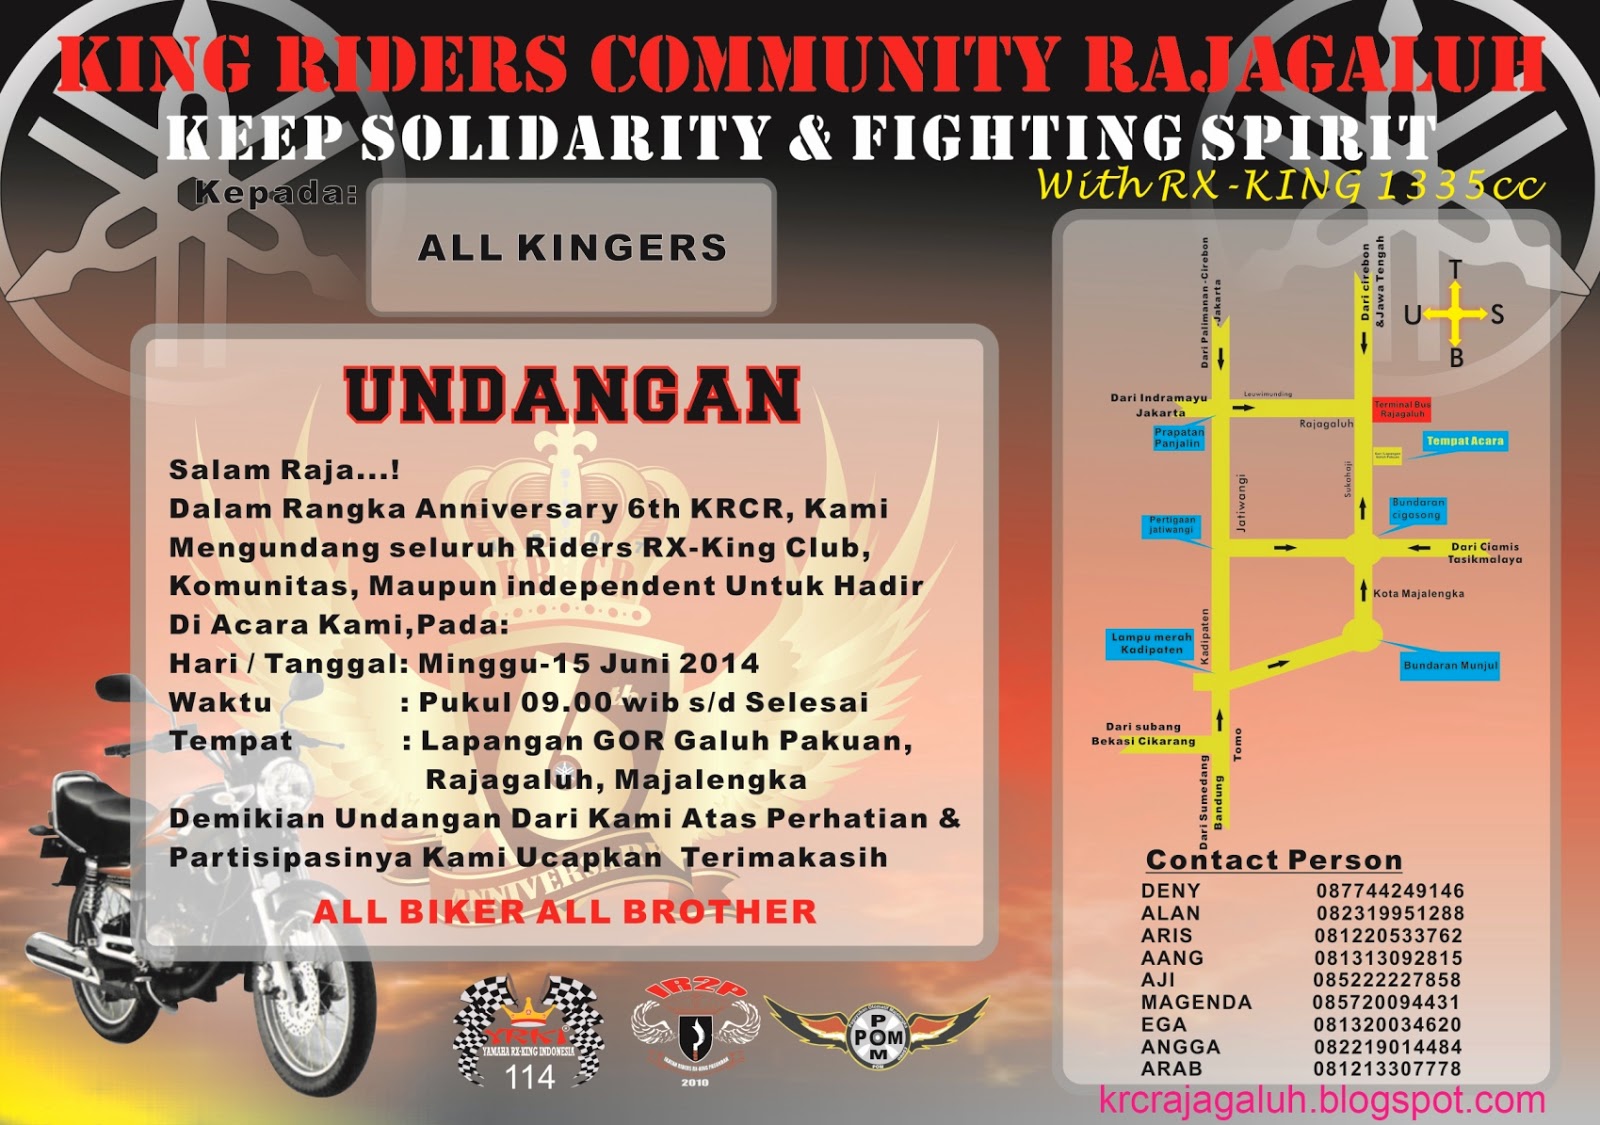 Update Yamaha Rx King Indonesia Tahun 2014 King Riders Community